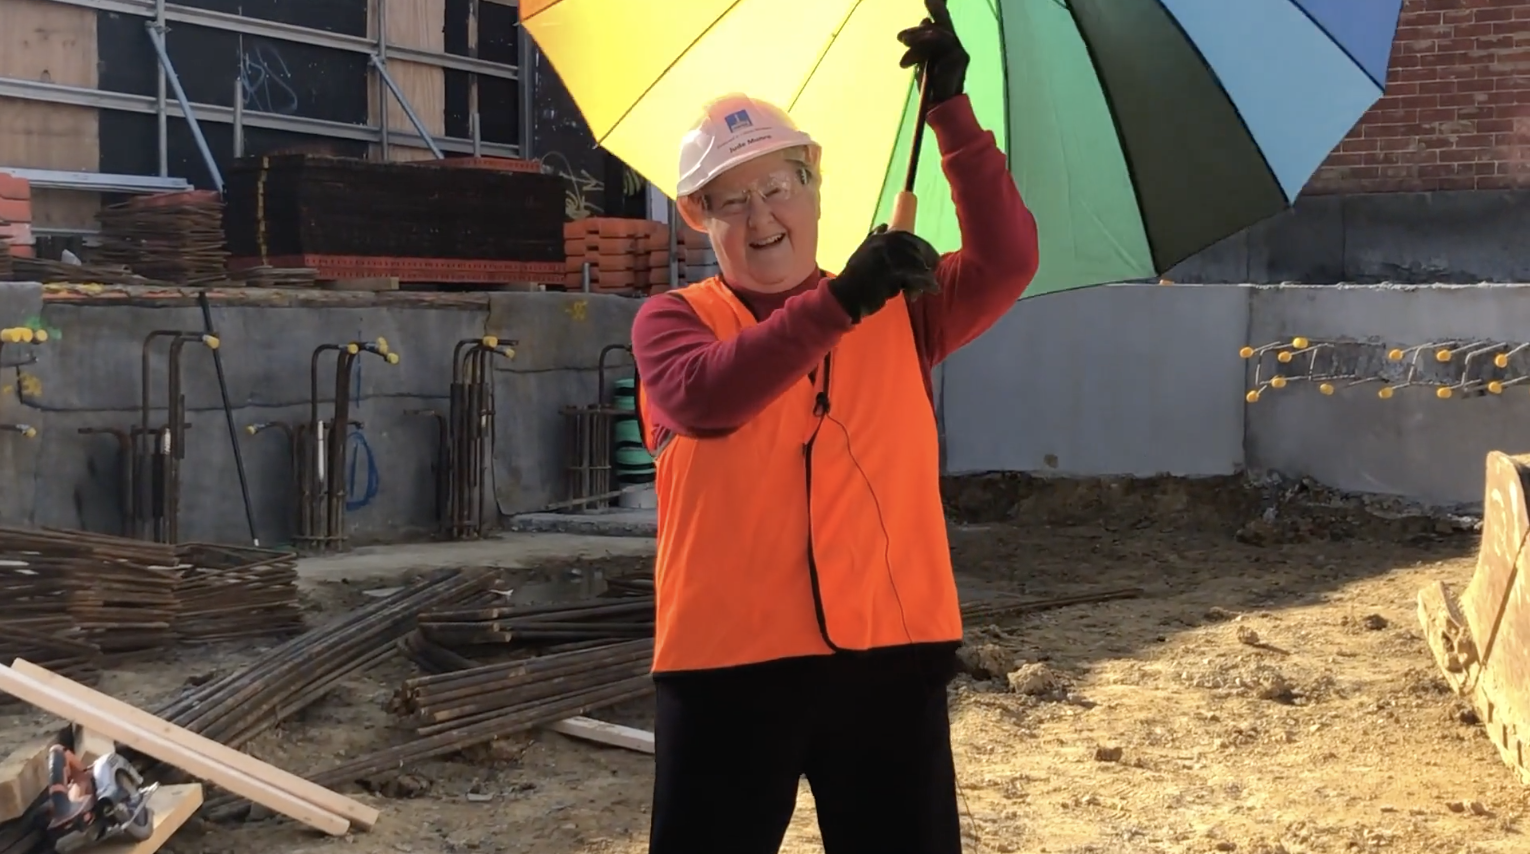 Jude on site holding Rainbow coloured umbrella